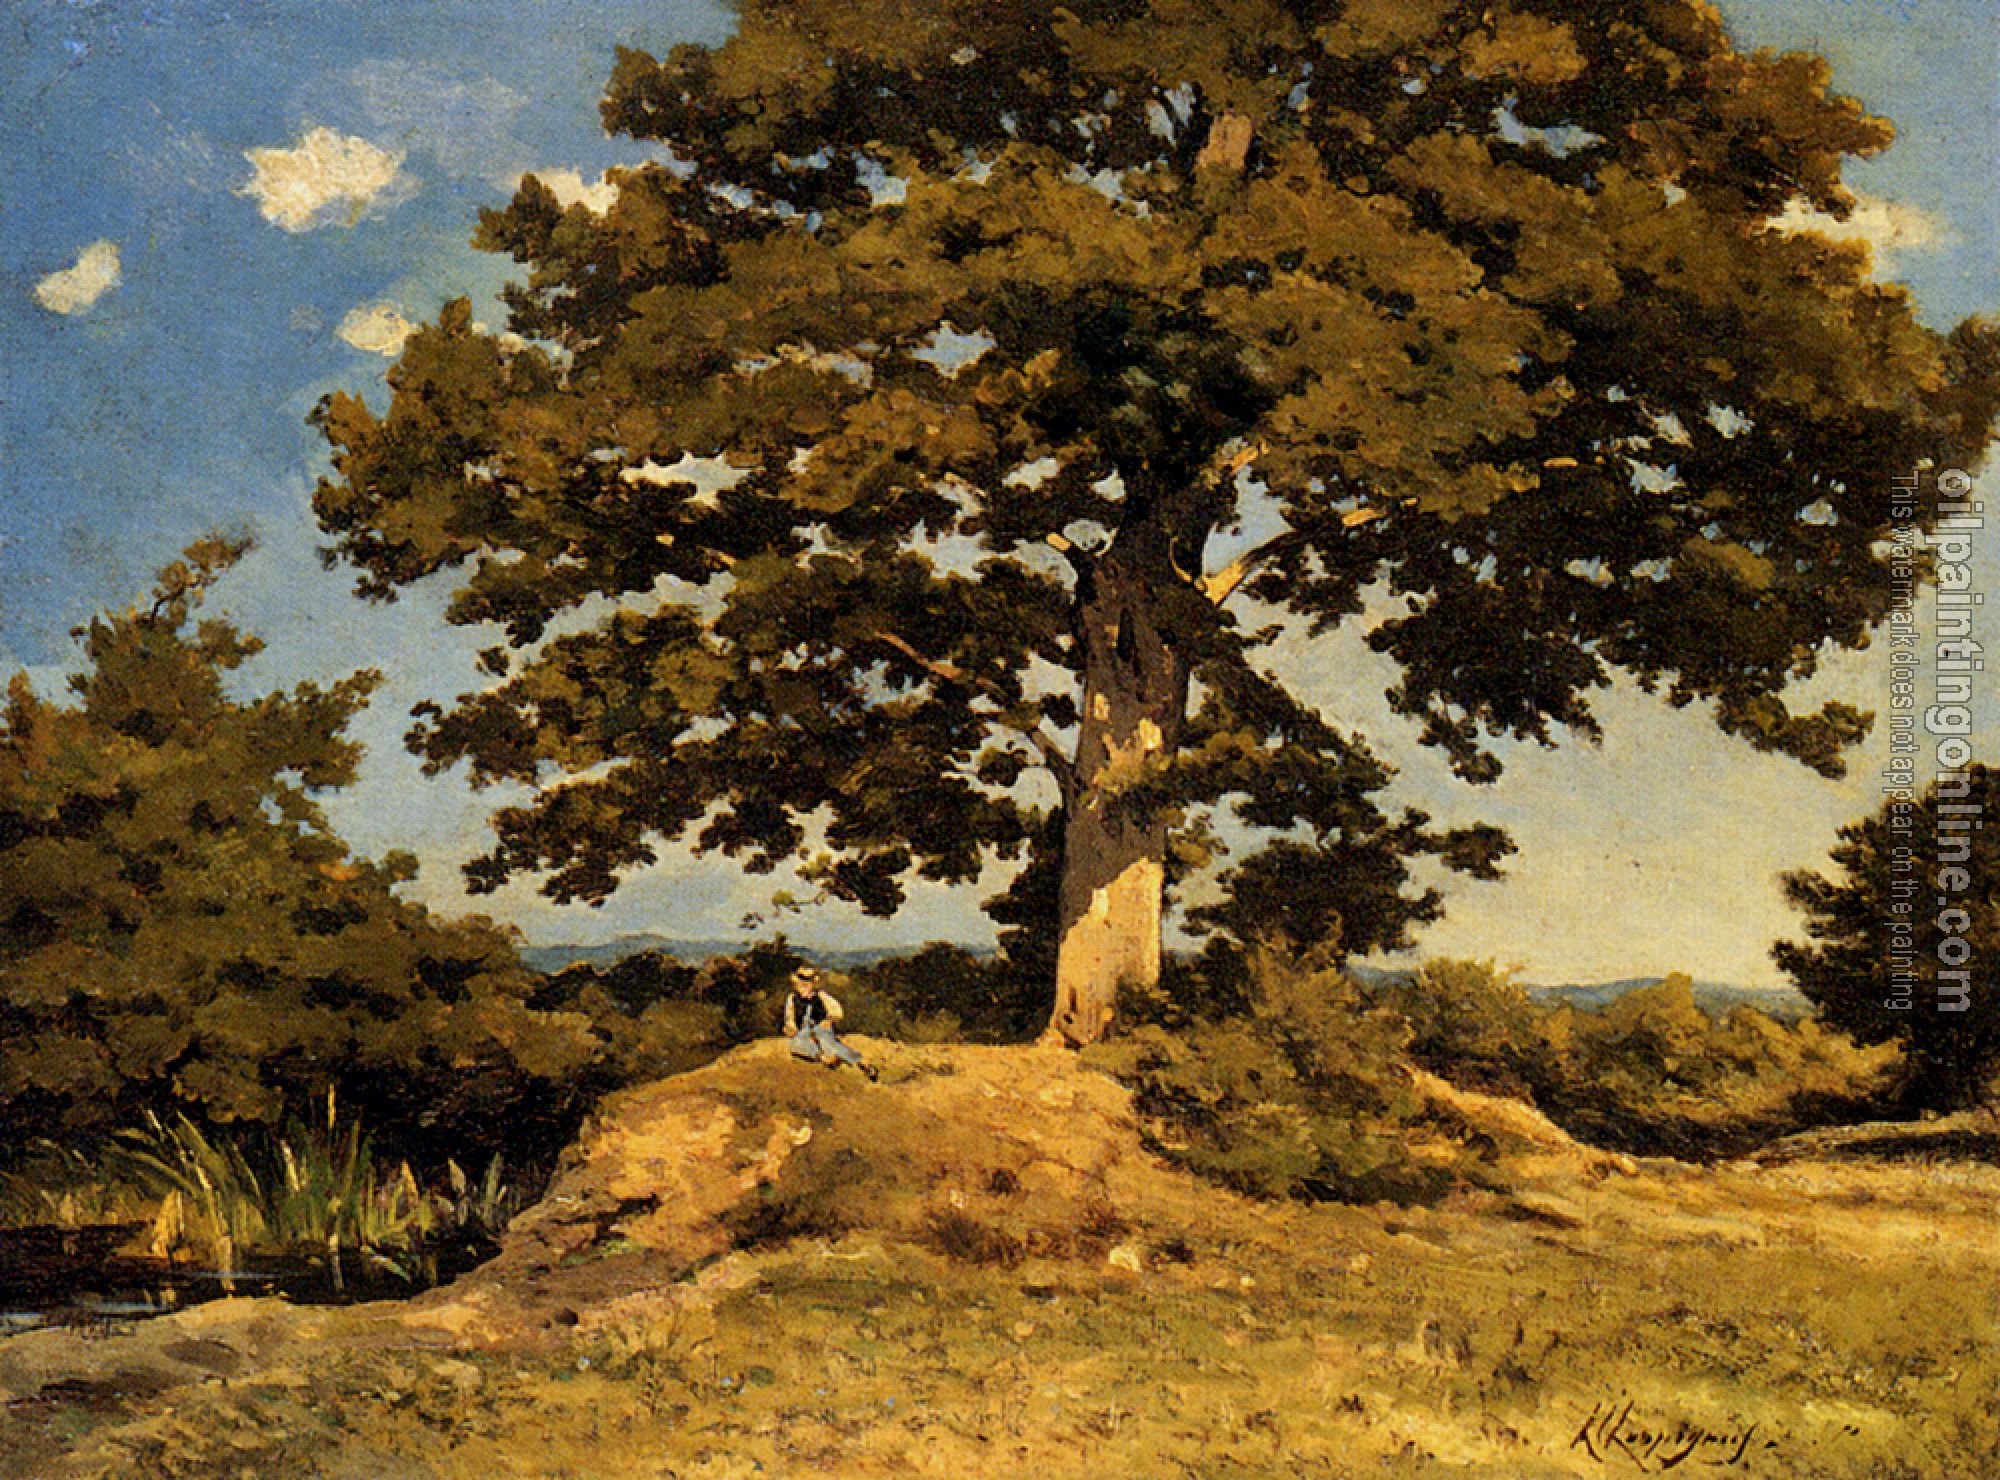 Henri-Joseph Harpignies - The Big Tree